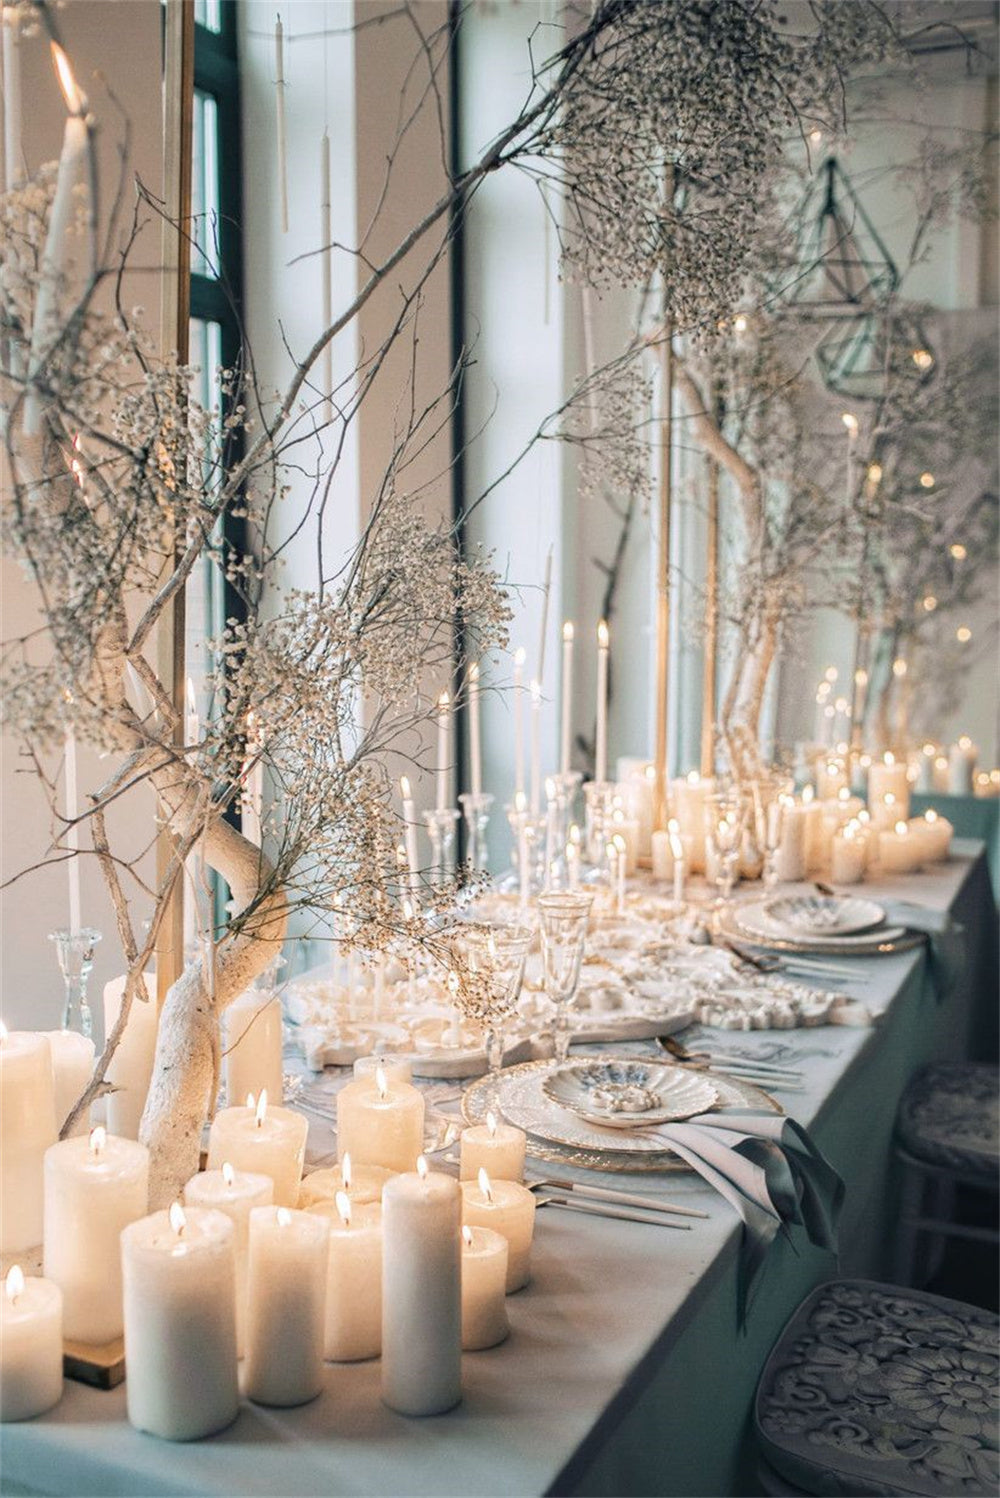 Enchanting Candlelit Winter Wedding Reception Decorations